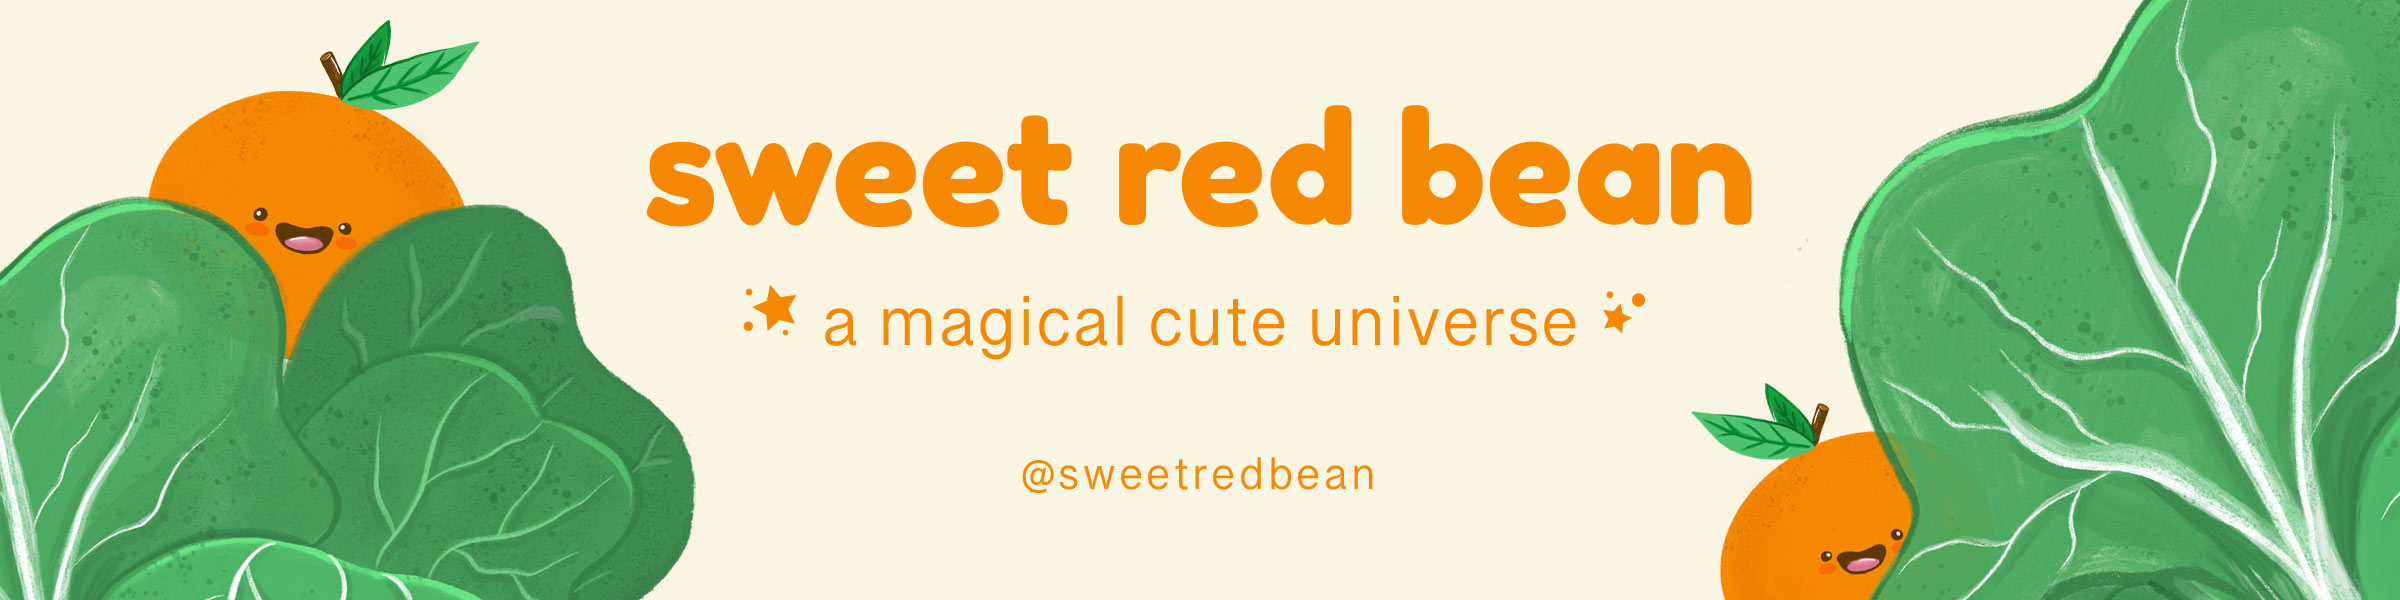 shop sweet red bean, a magical universe